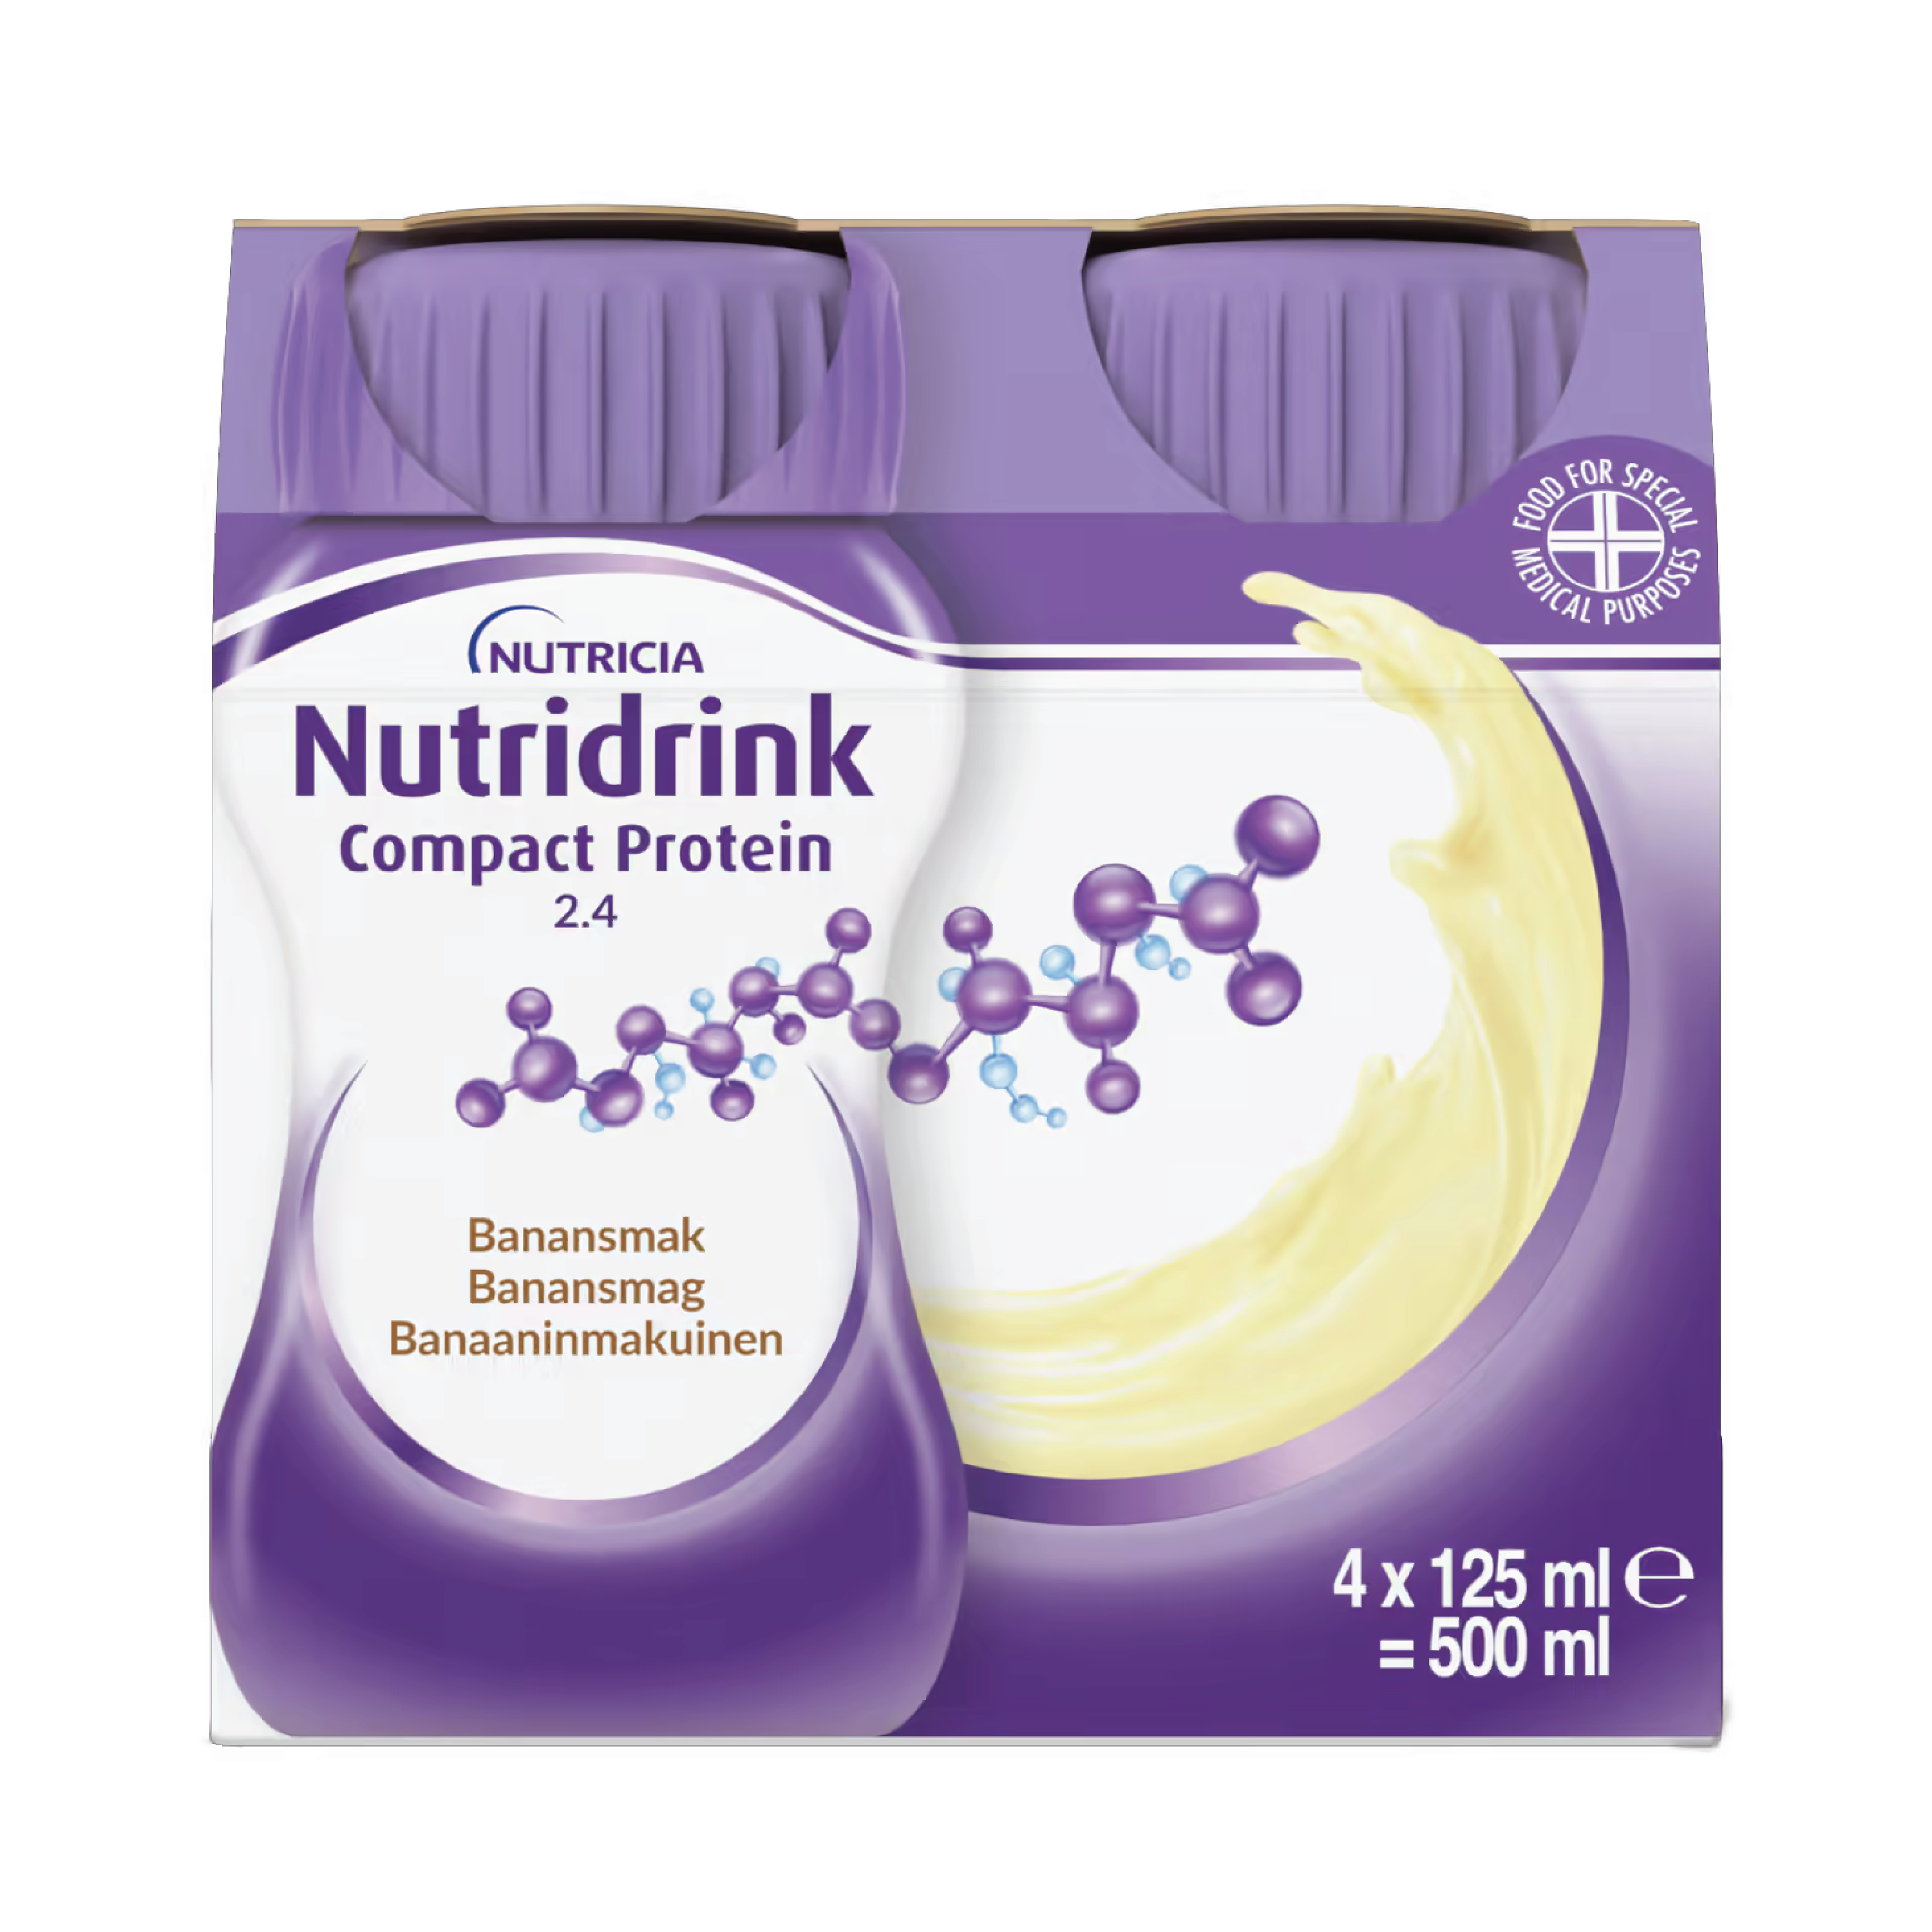 Nutridrink Compact Protein Næringsdrikk, Banan, 4x125 ml